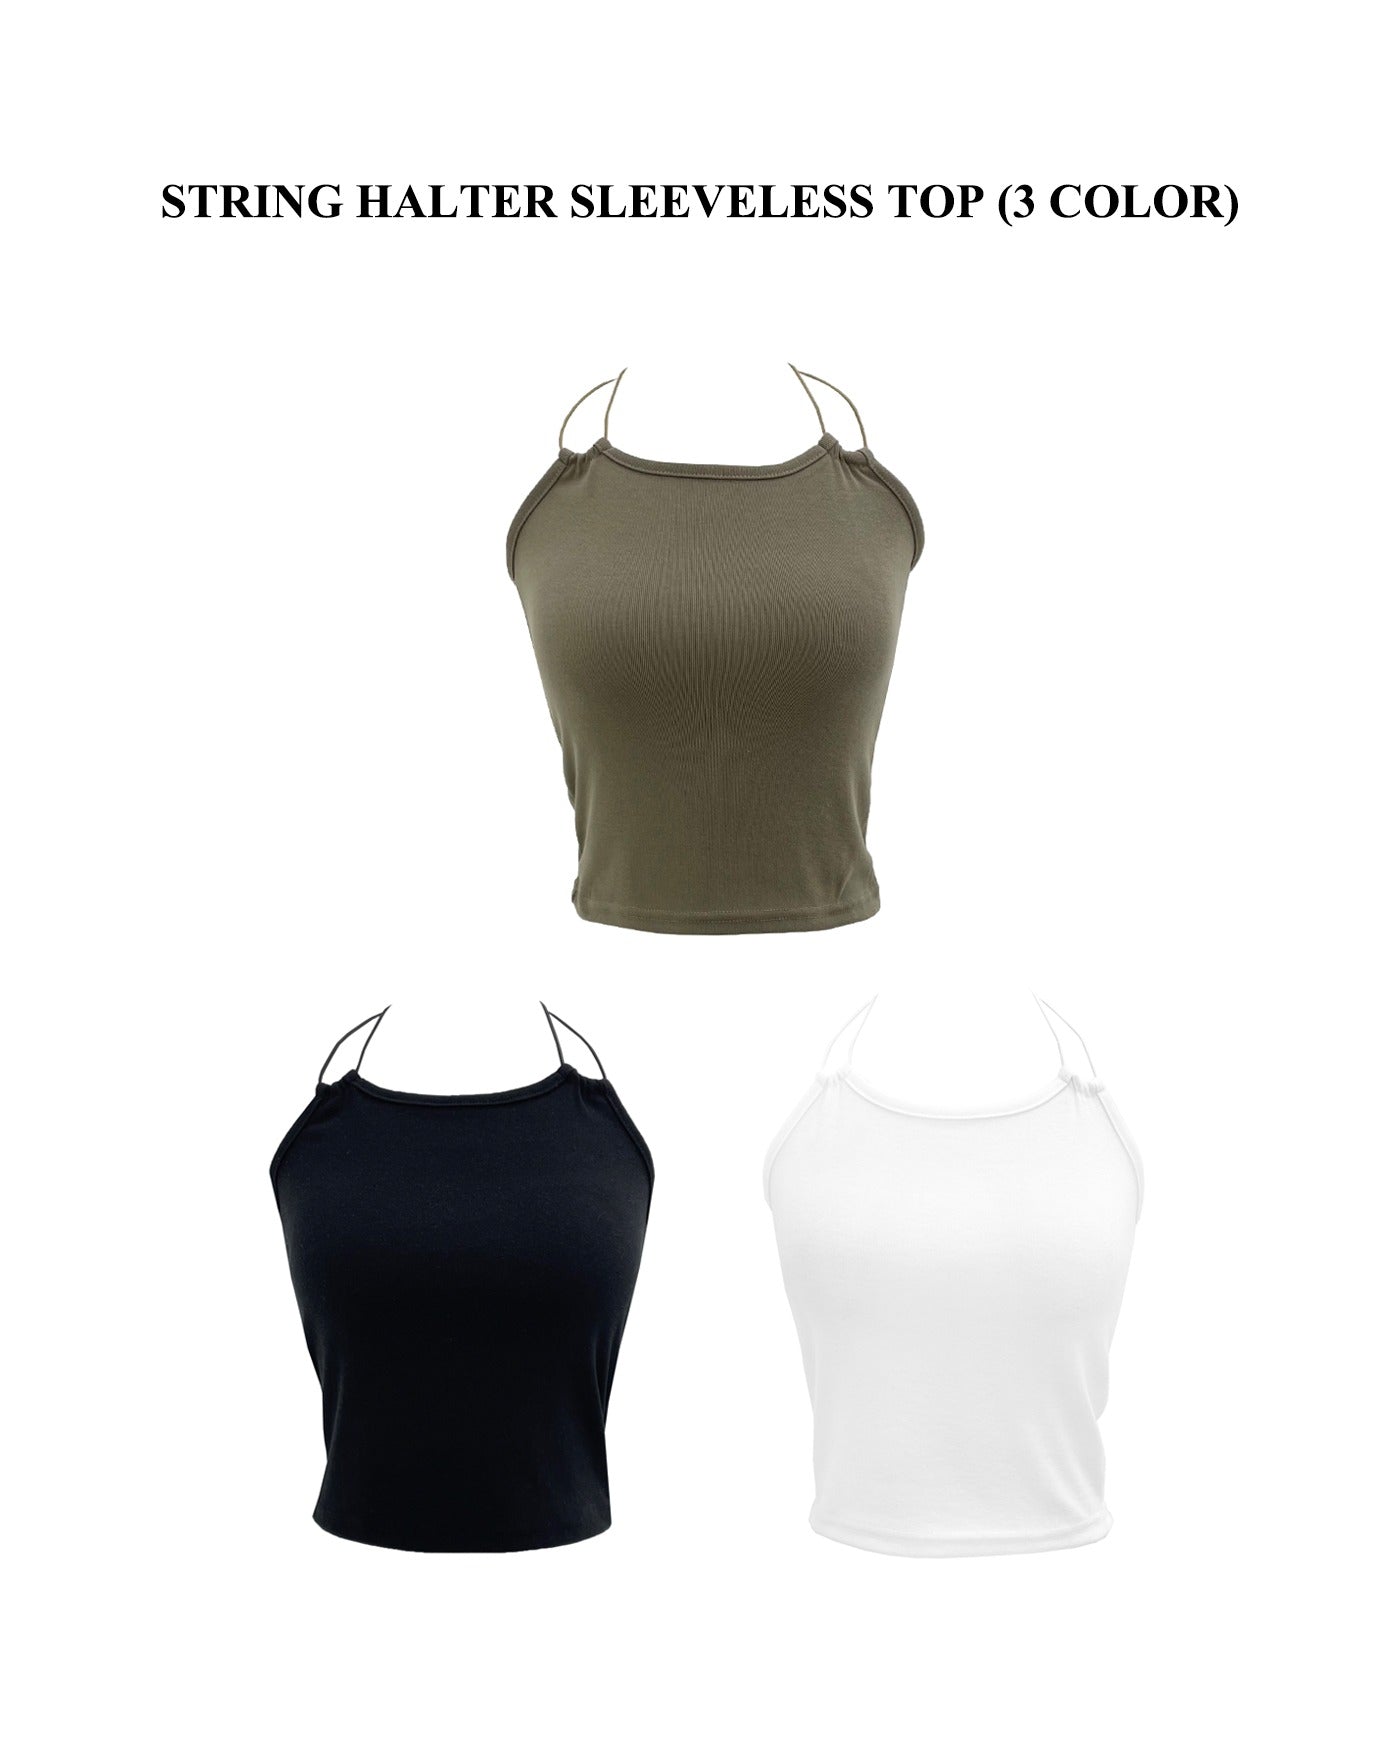 String halter sleeveless top (3 Color)